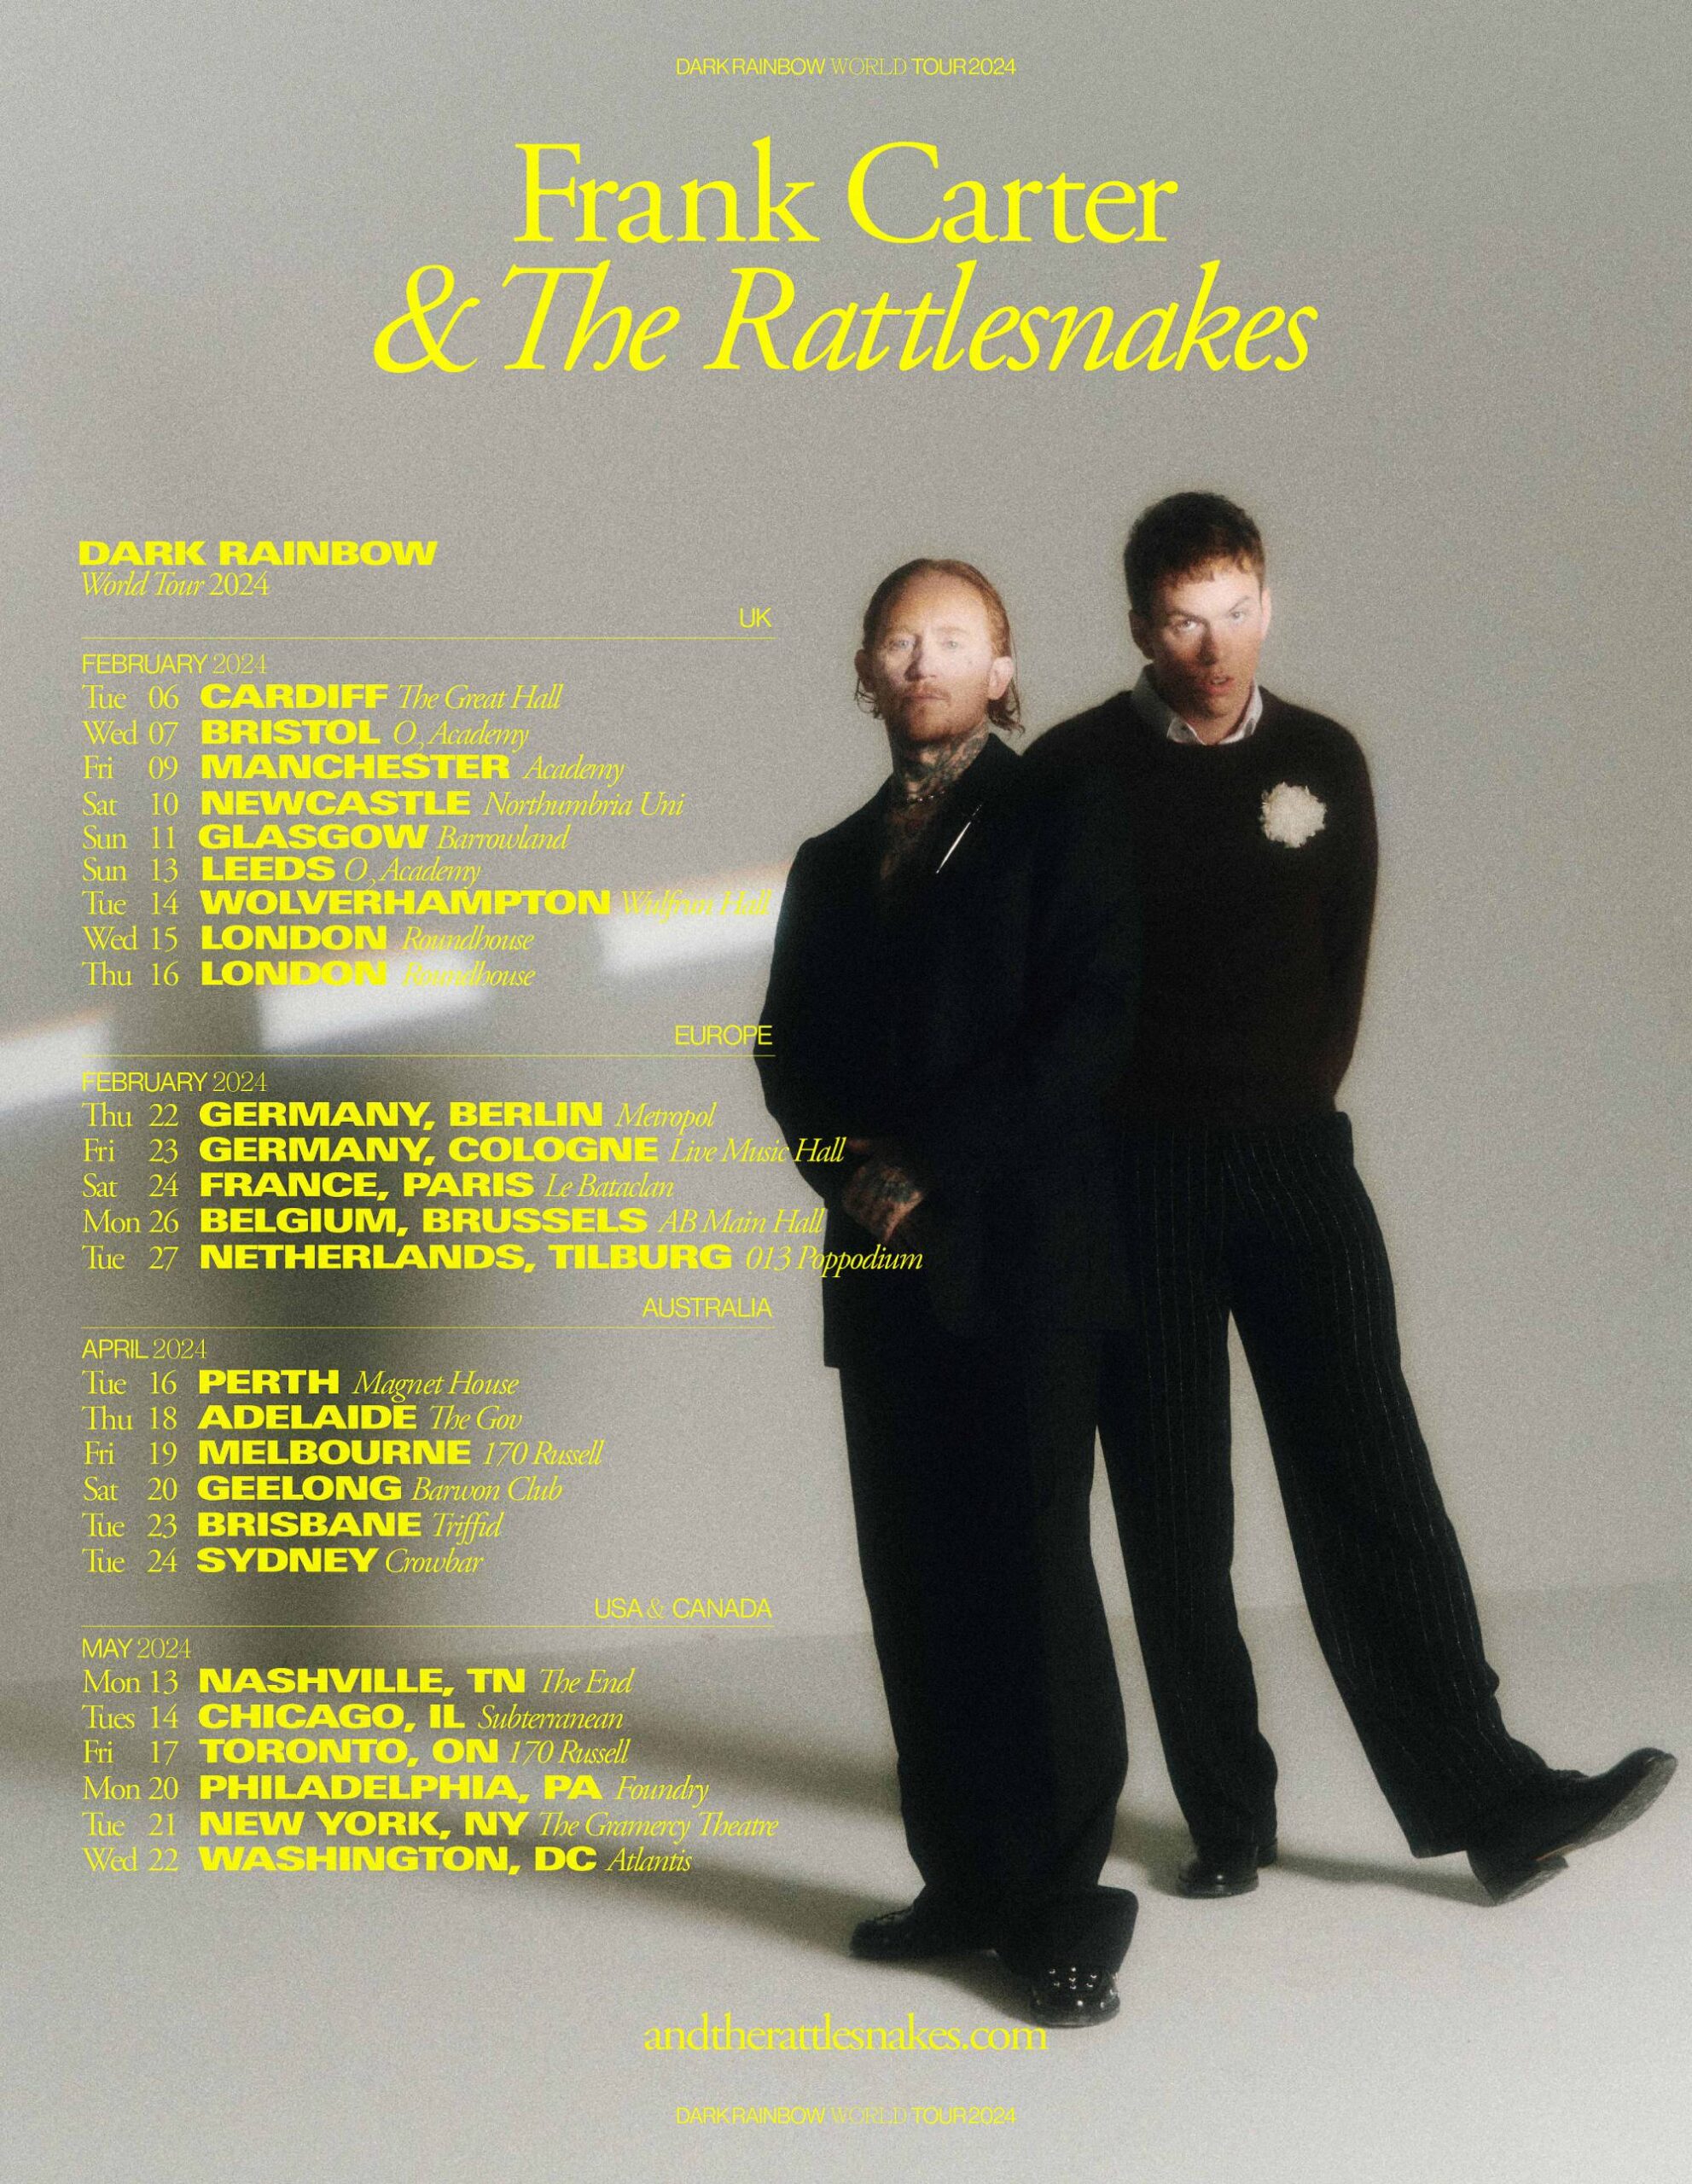 Frank Carter & The Rattlesnakes tour poster. Credit: PRESS